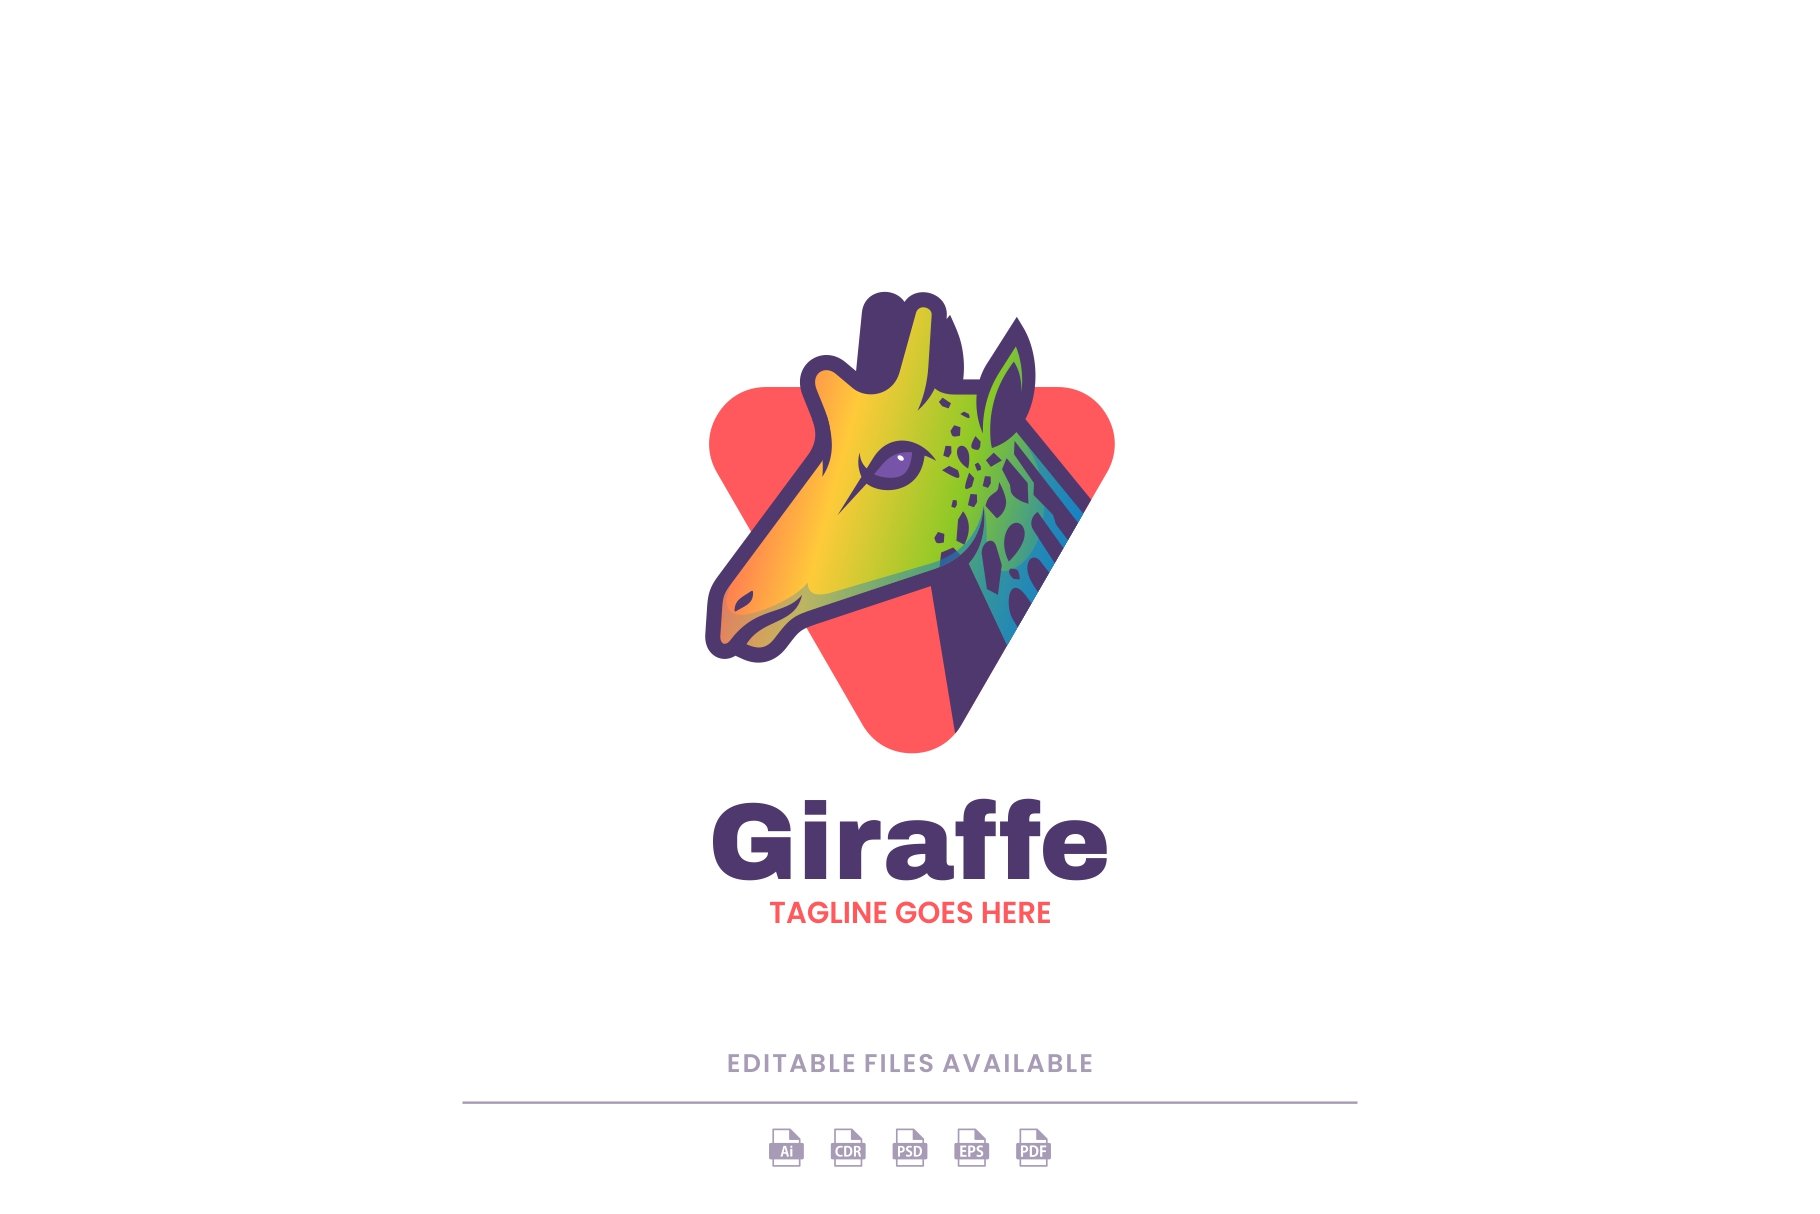 Giraffe Color Mascot Logo cover image.